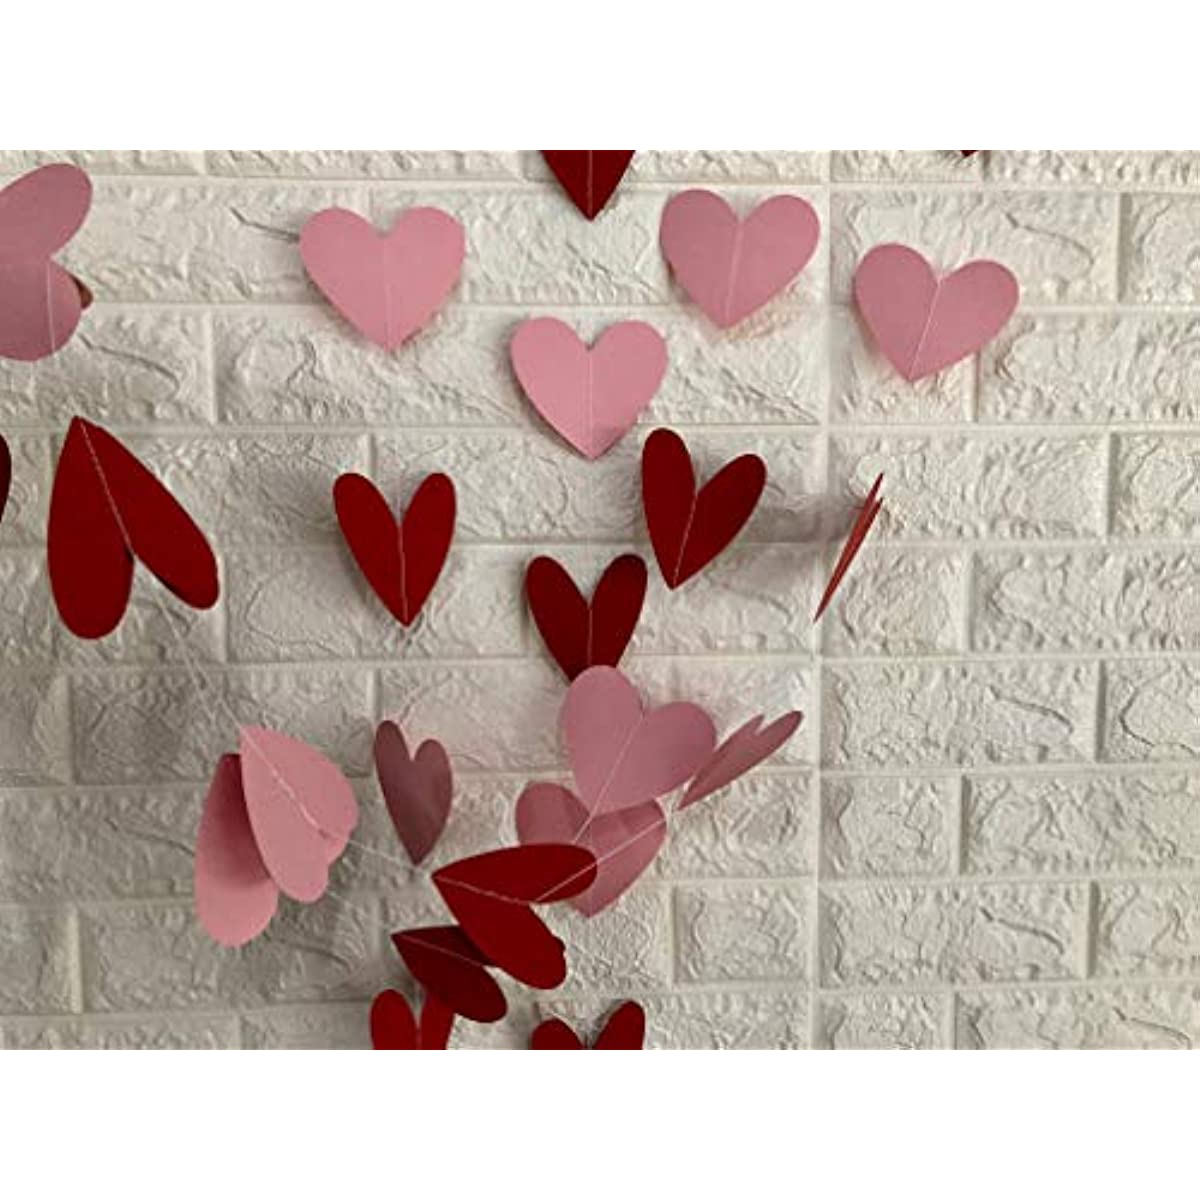 Valentine's Day Red Felt Hearts- SET of 5 or 10- DIY Craft Decor